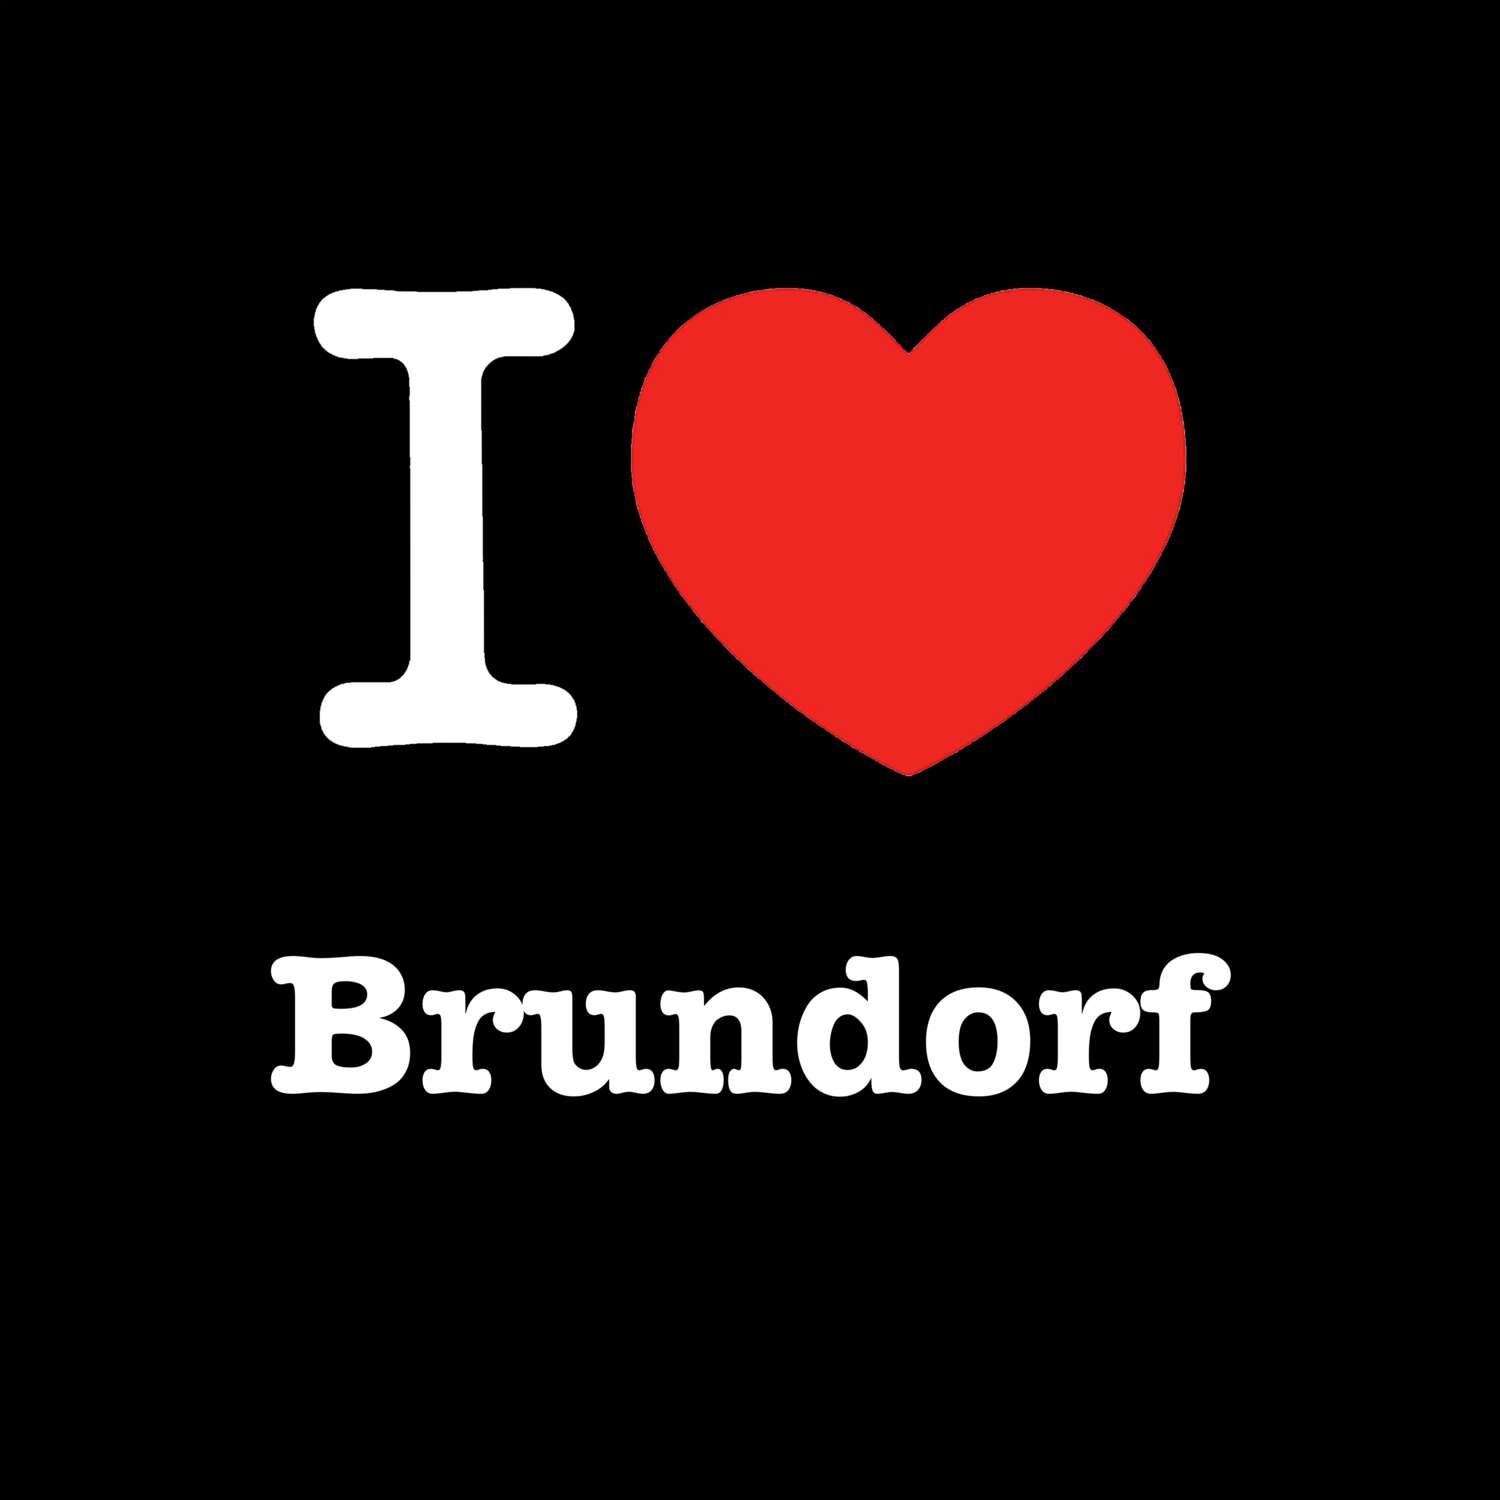 Brundorf T-Shirt »I love«